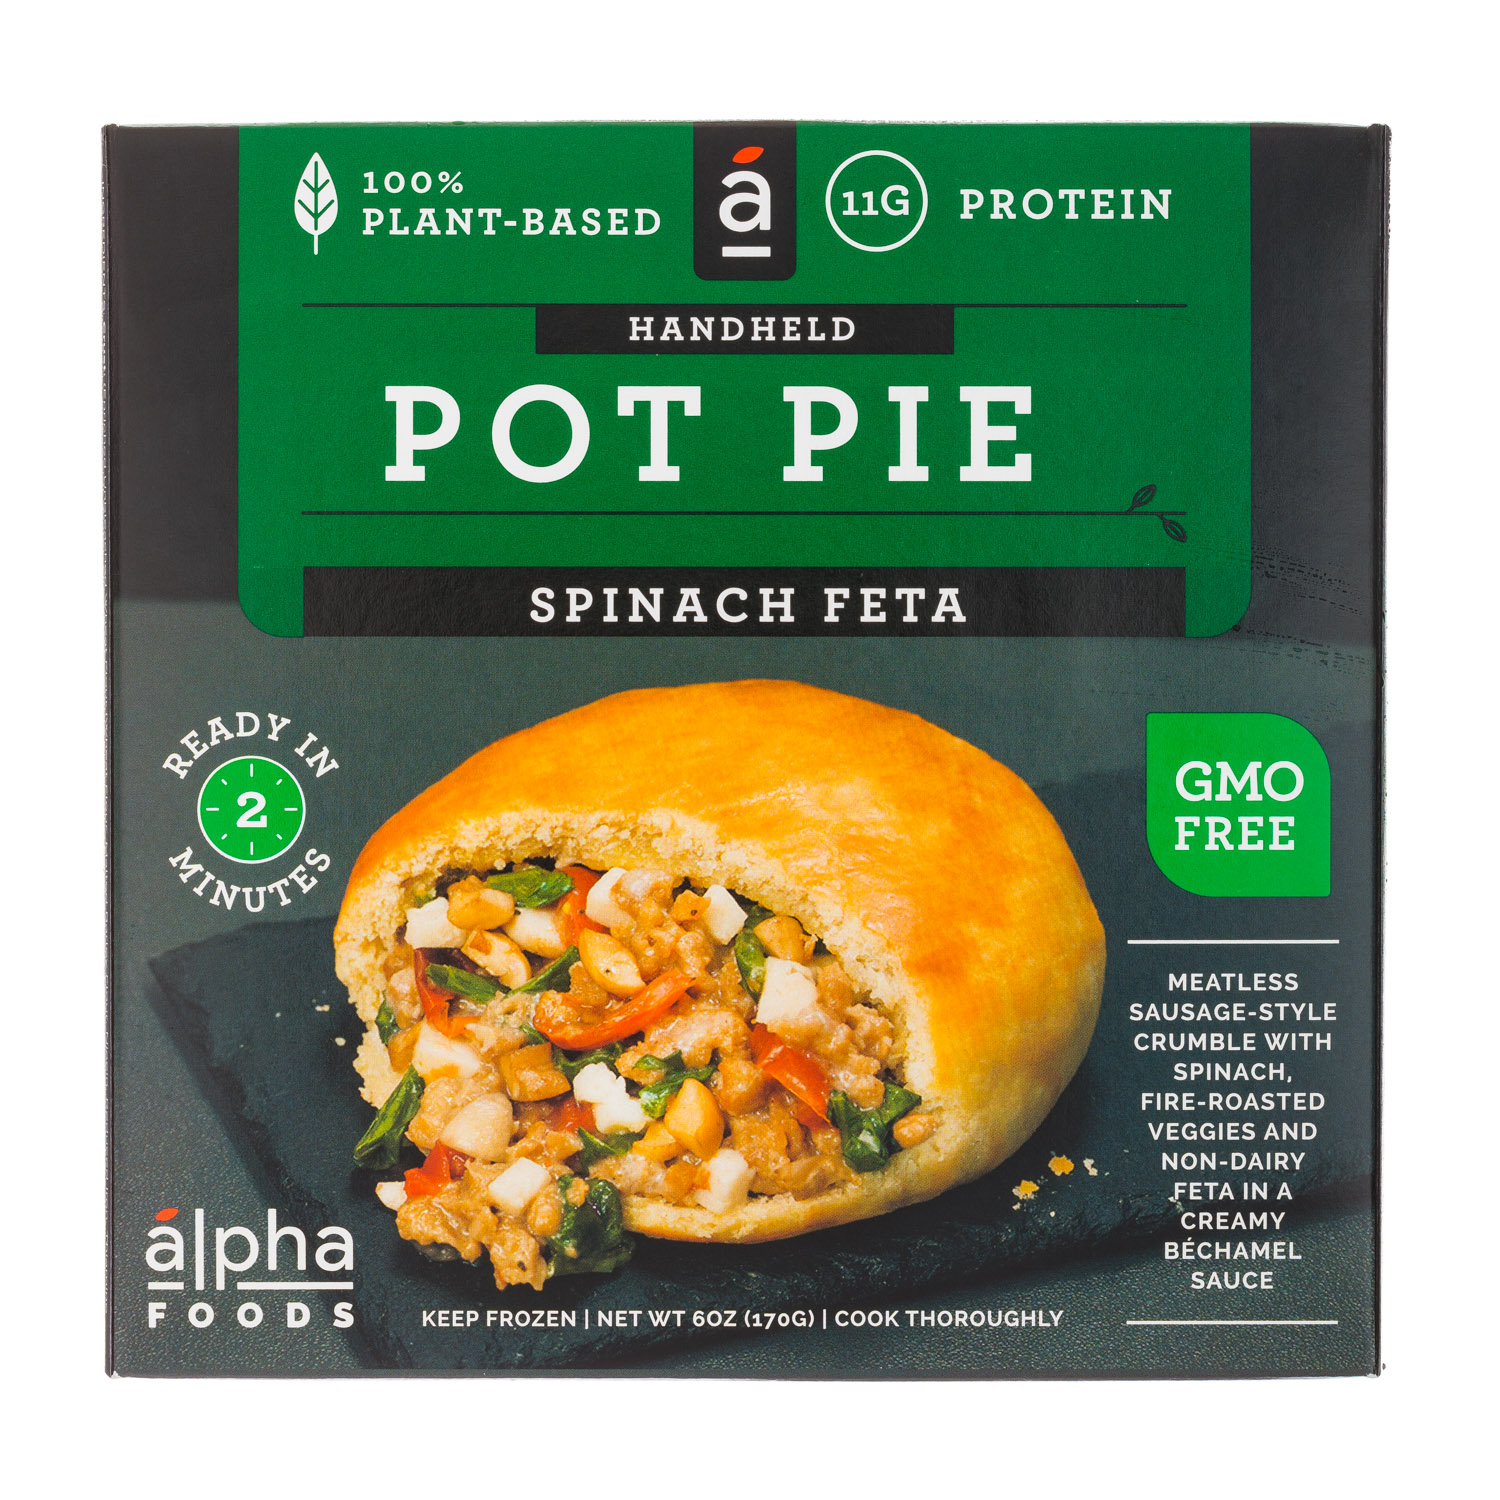 Spinach Feta Pot Pie